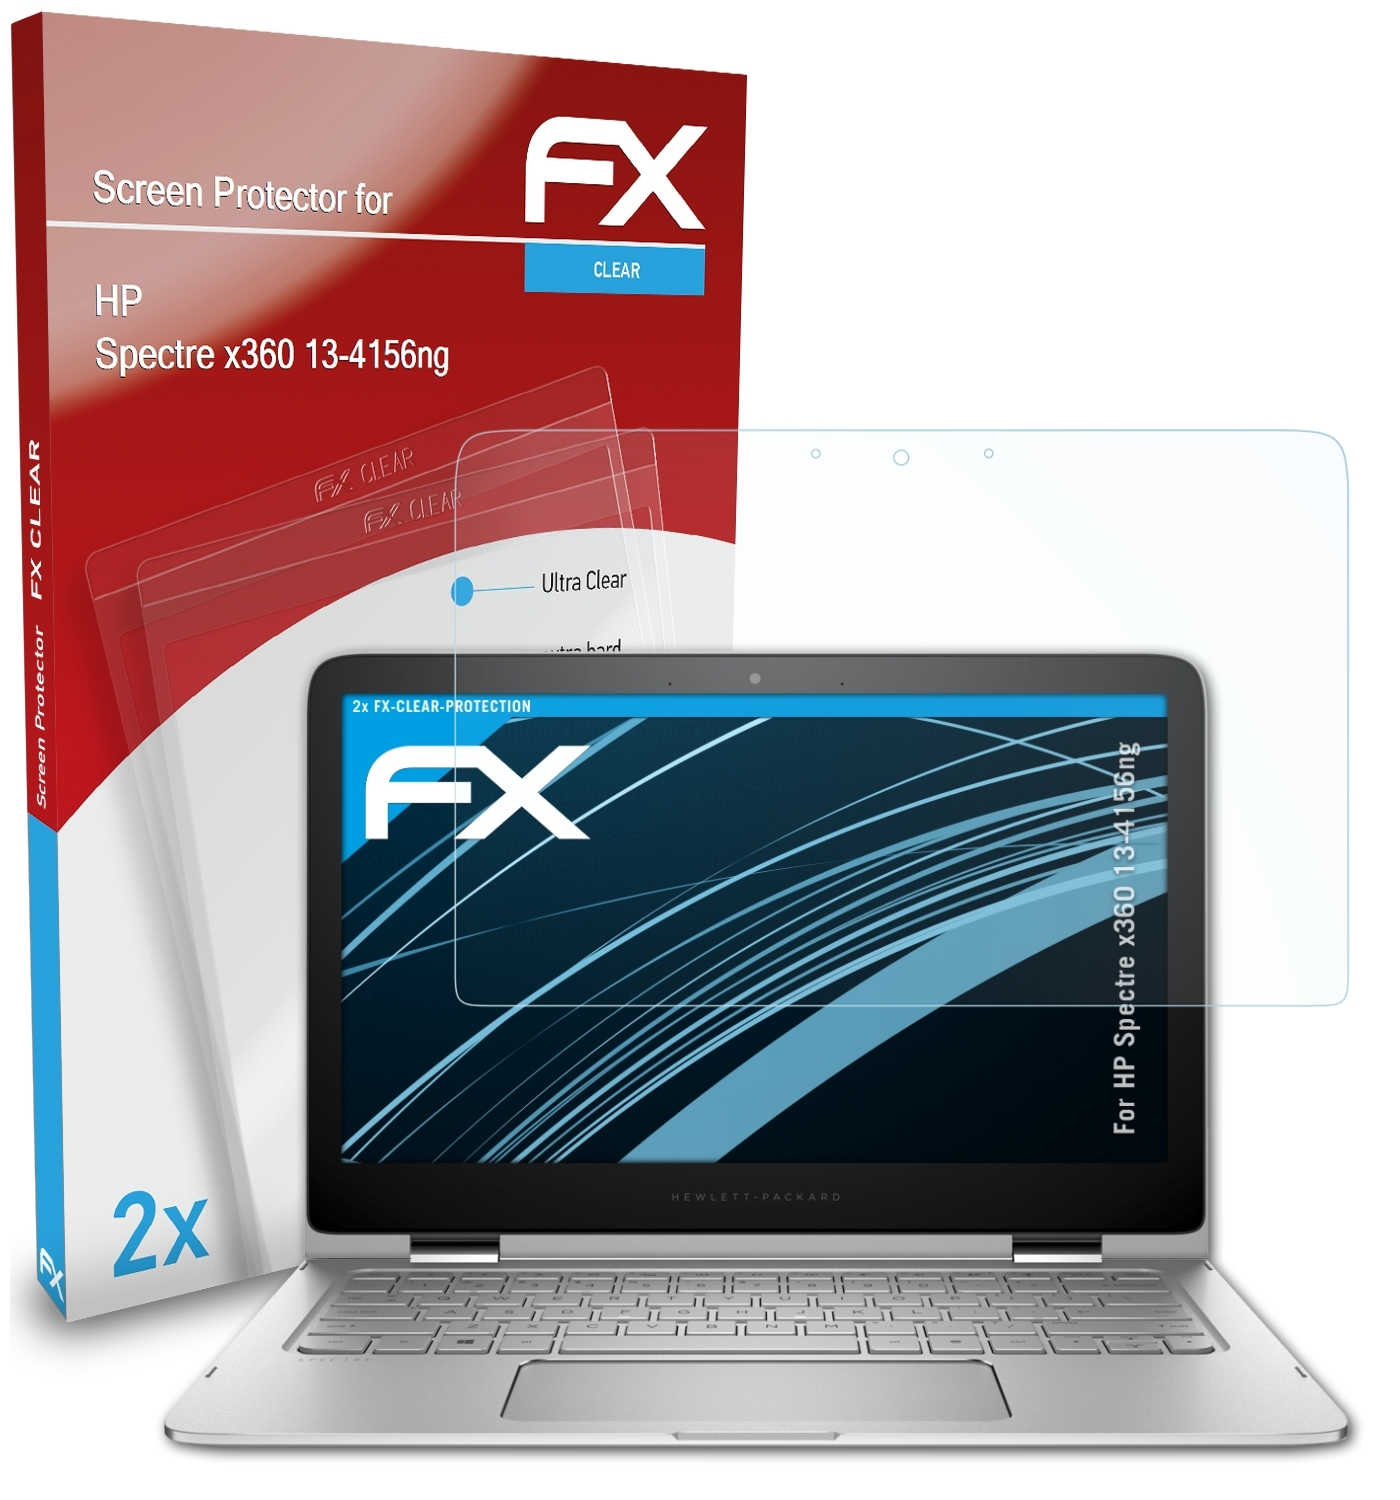 ATFOLIX 2x HP Displayschutz(für 13-4156ng) x360 FX-Clear Spectre